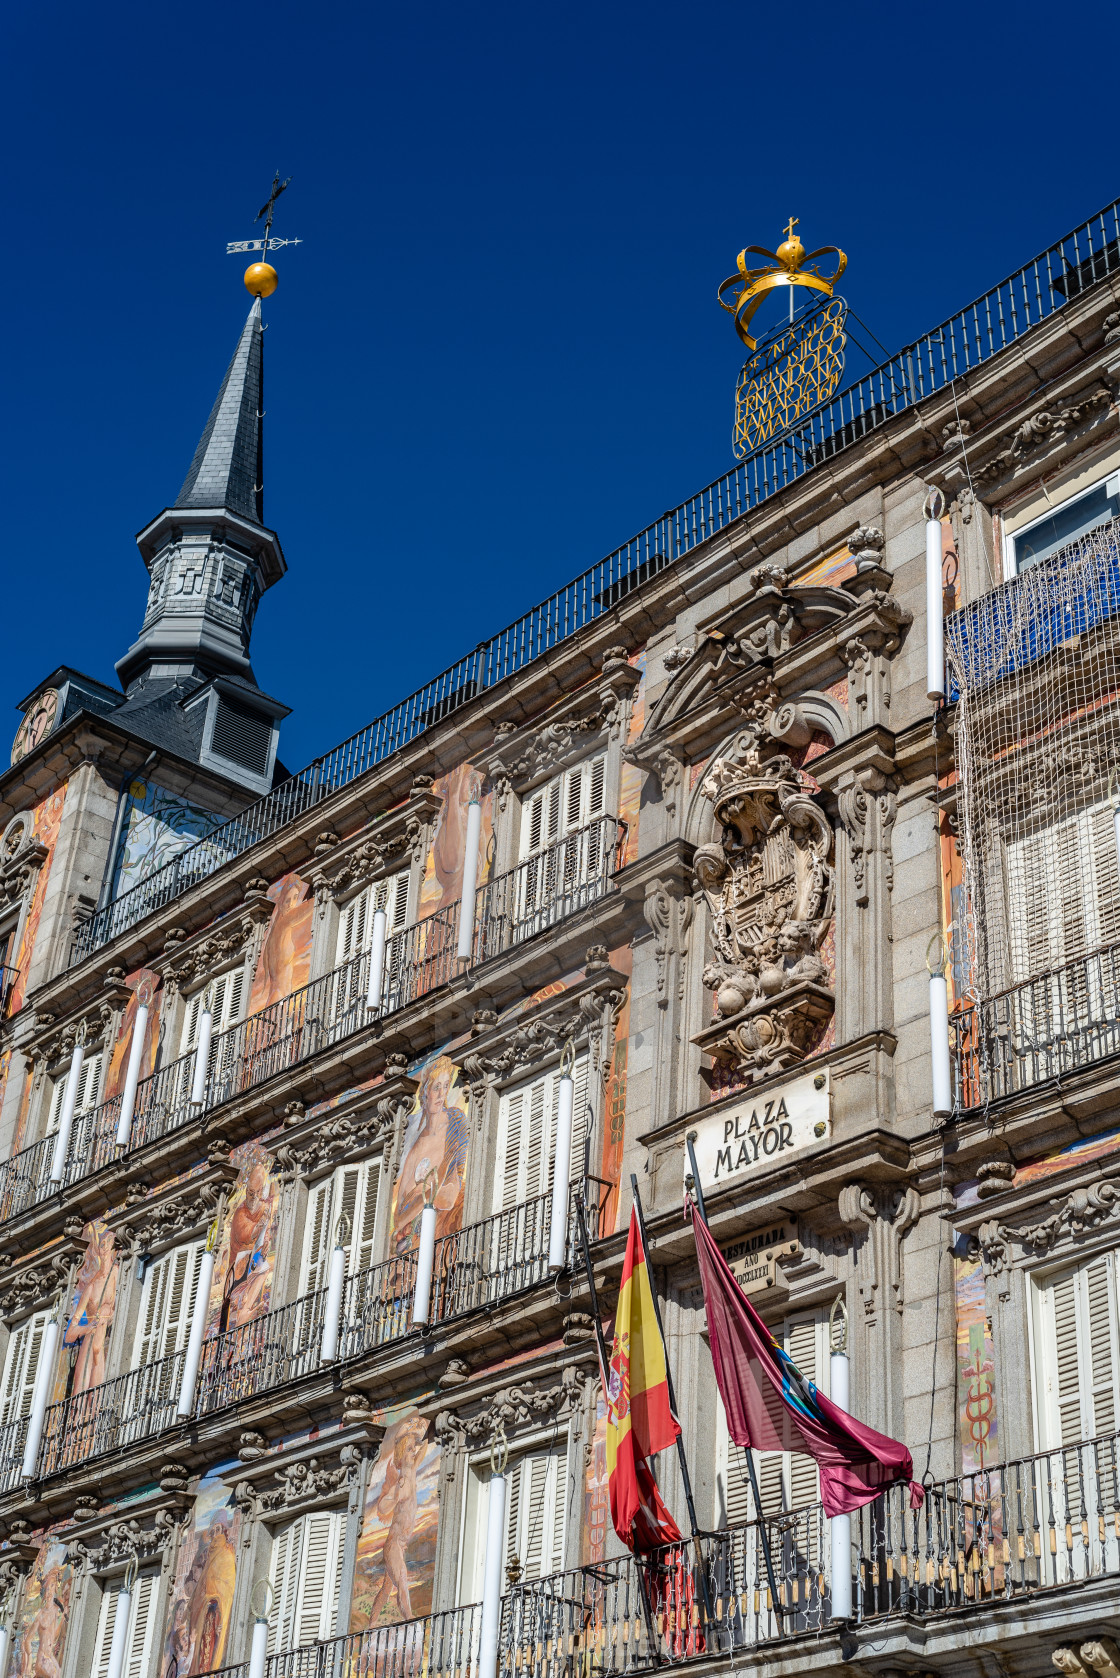 "The Plaza Mayor or Main Square of Madrid" stock image